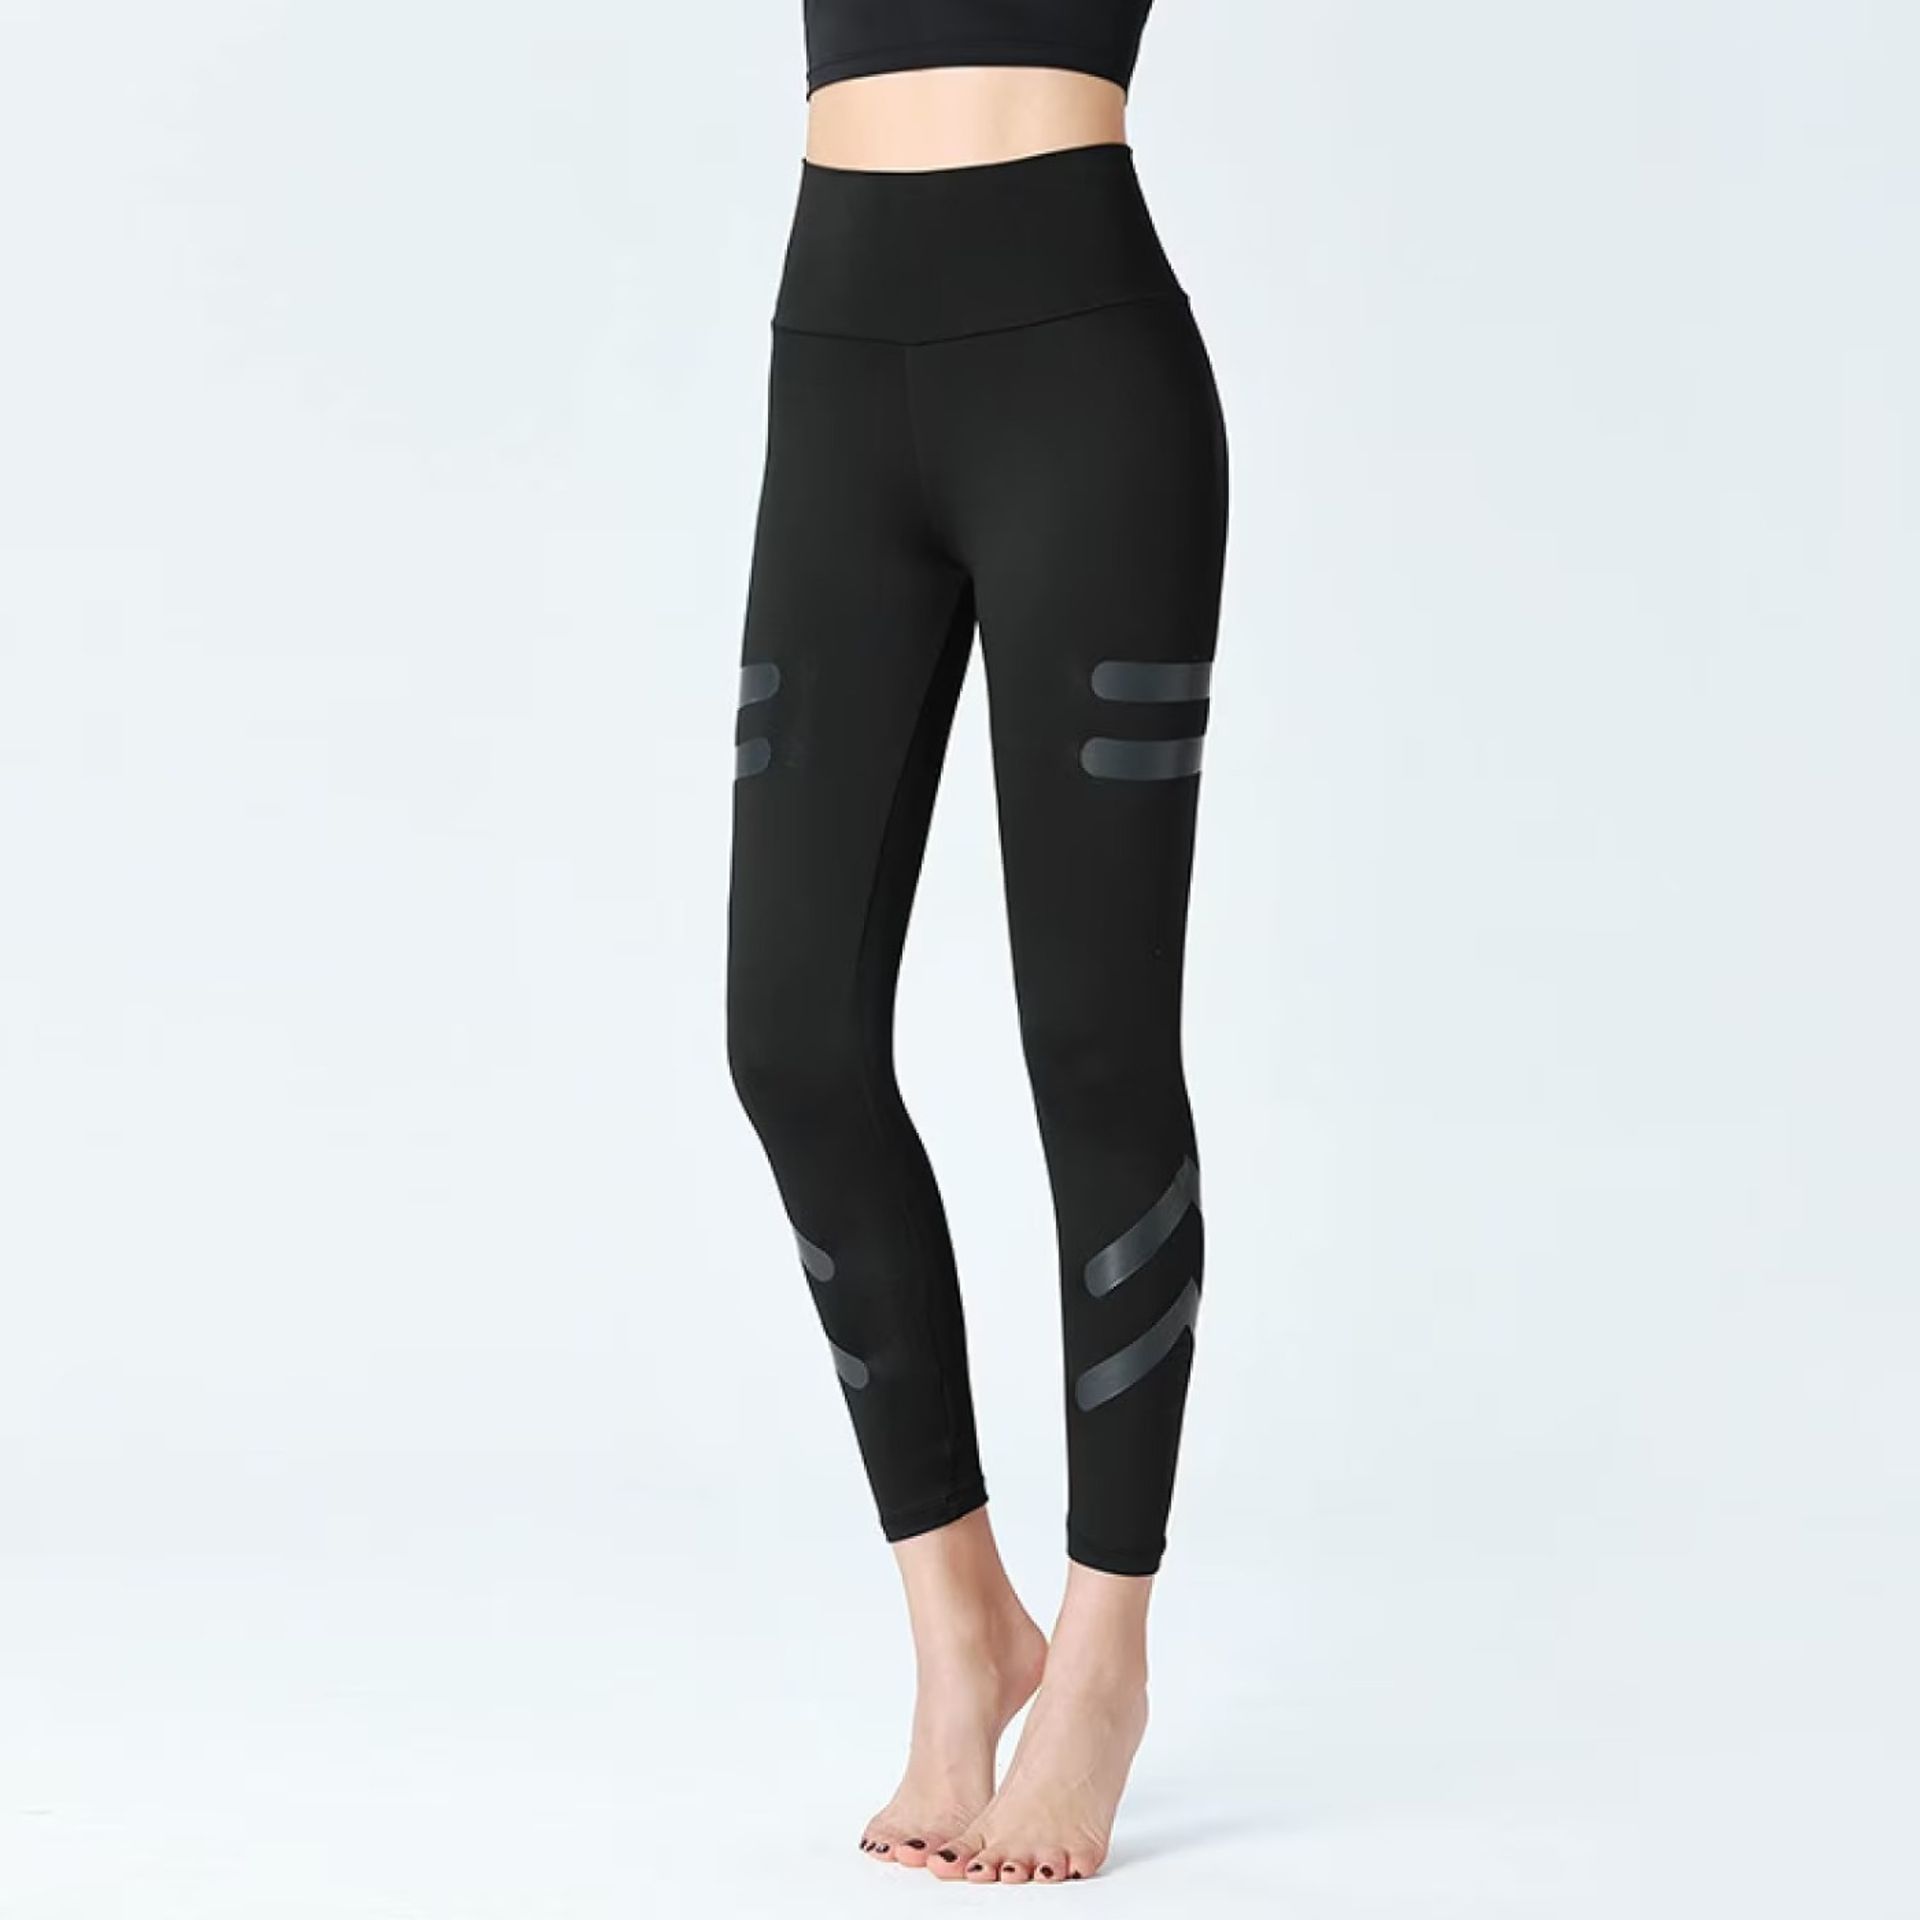 BRAND NEW Women's Black Yoga Pants High Waist Leggings Hip Lifting Casual Quick-drying